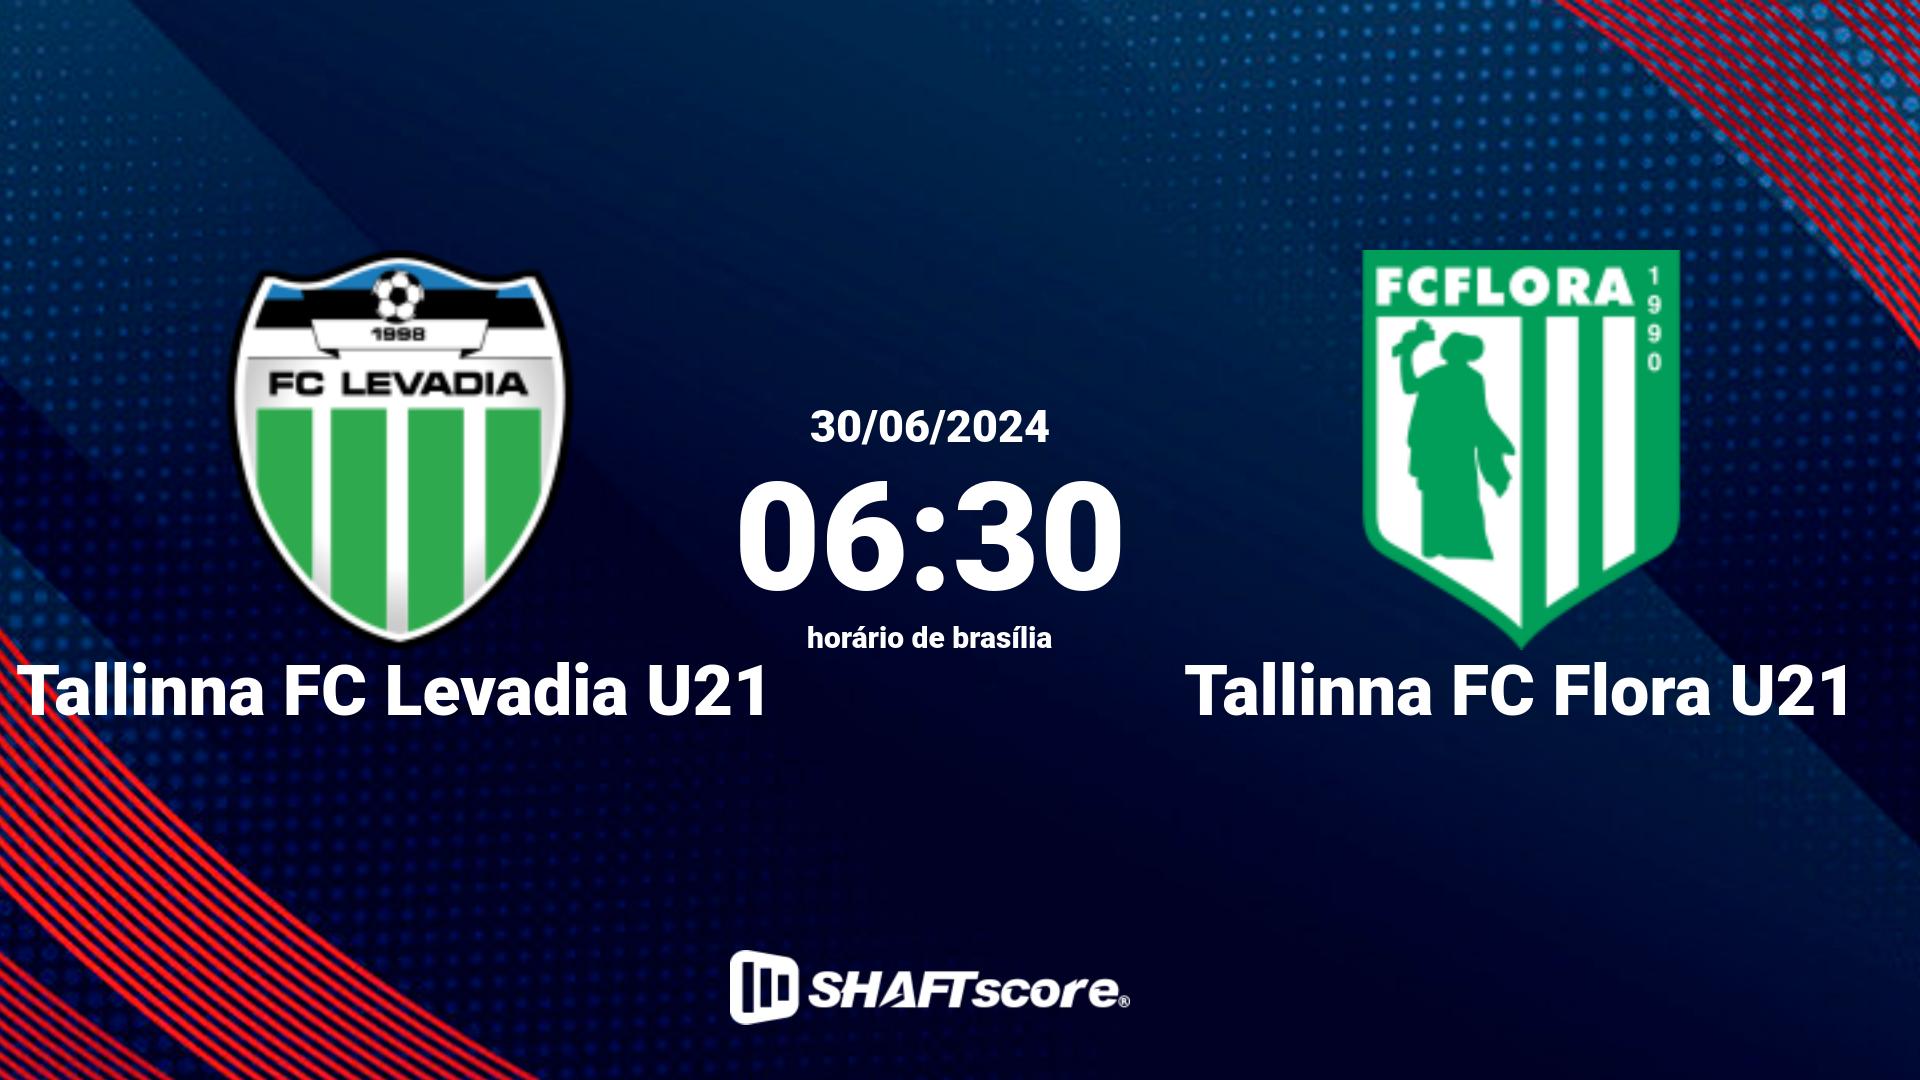 Estatísticas do jogo Tallinna FC Levadia U21 vs Tallinna FC Flora U21 30.06 06:30